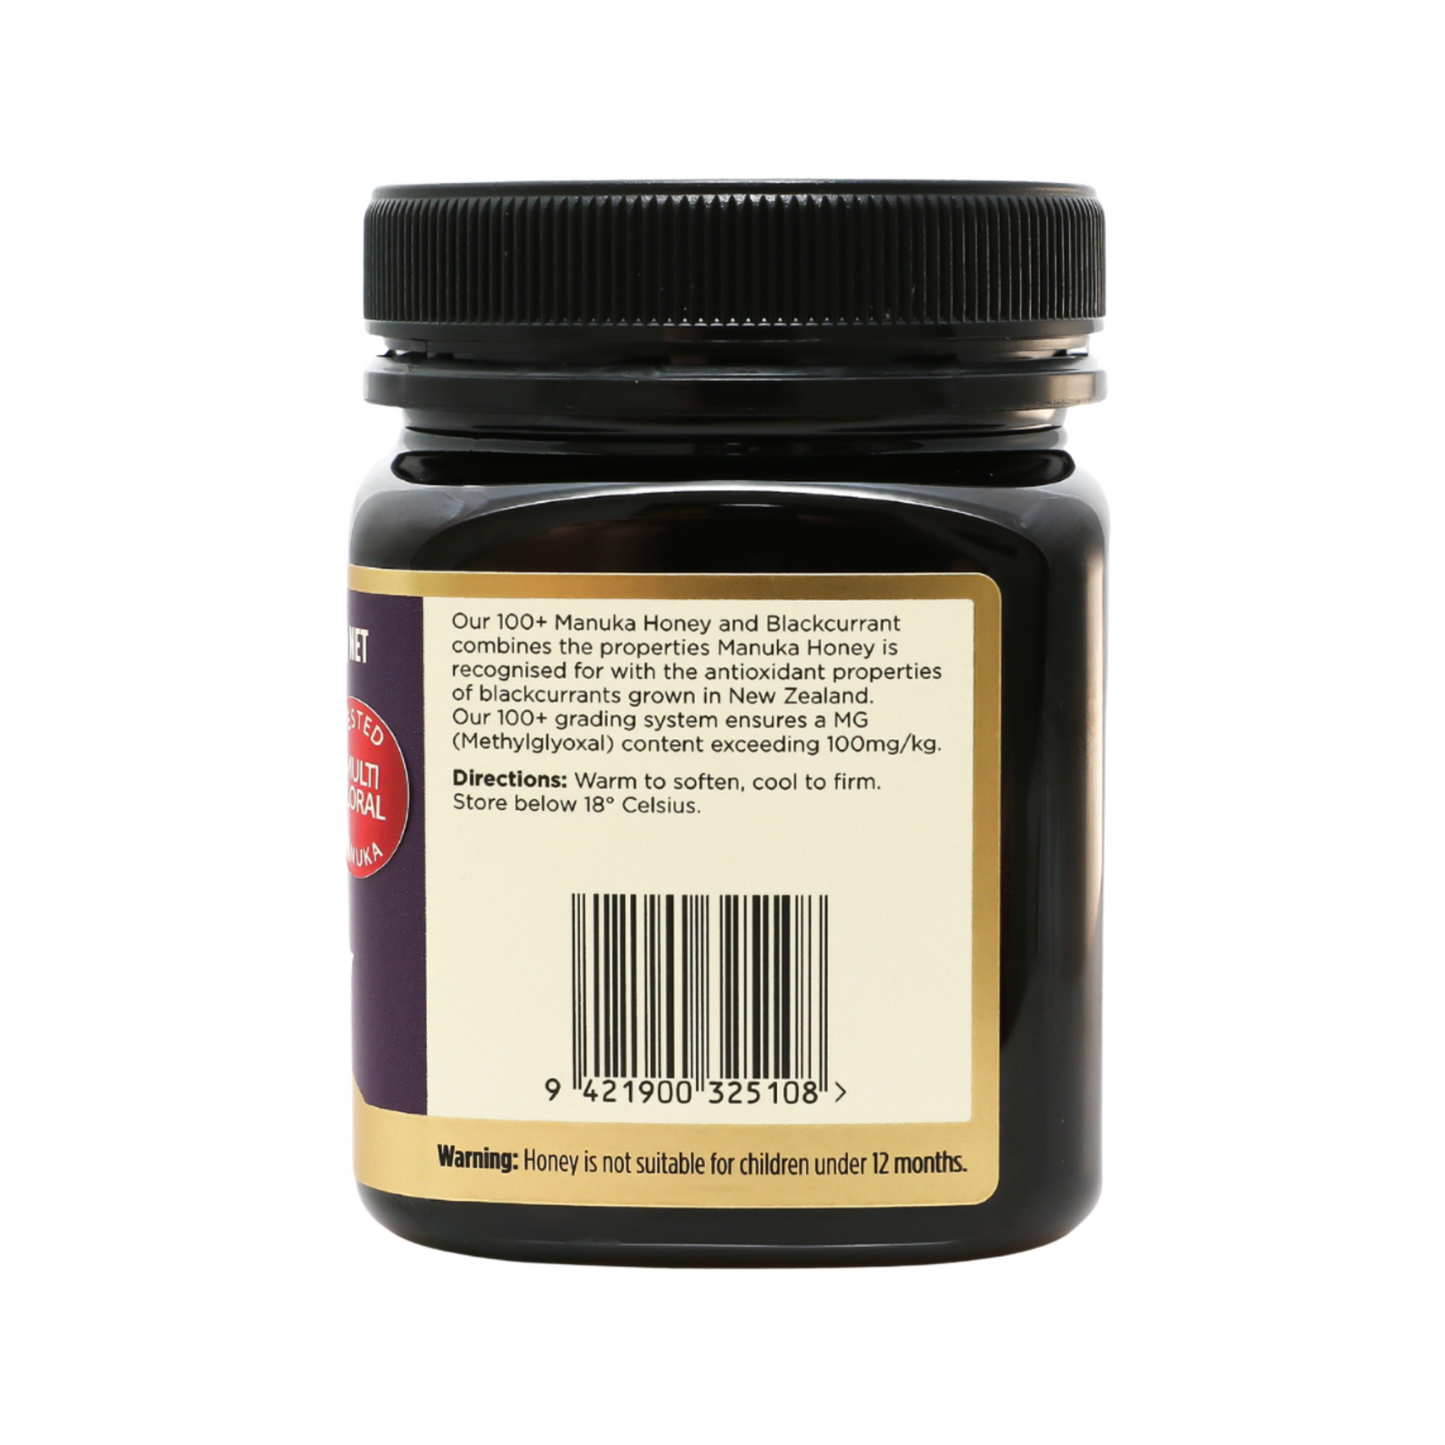 NEW - Manuka Honey with Blackcurrant